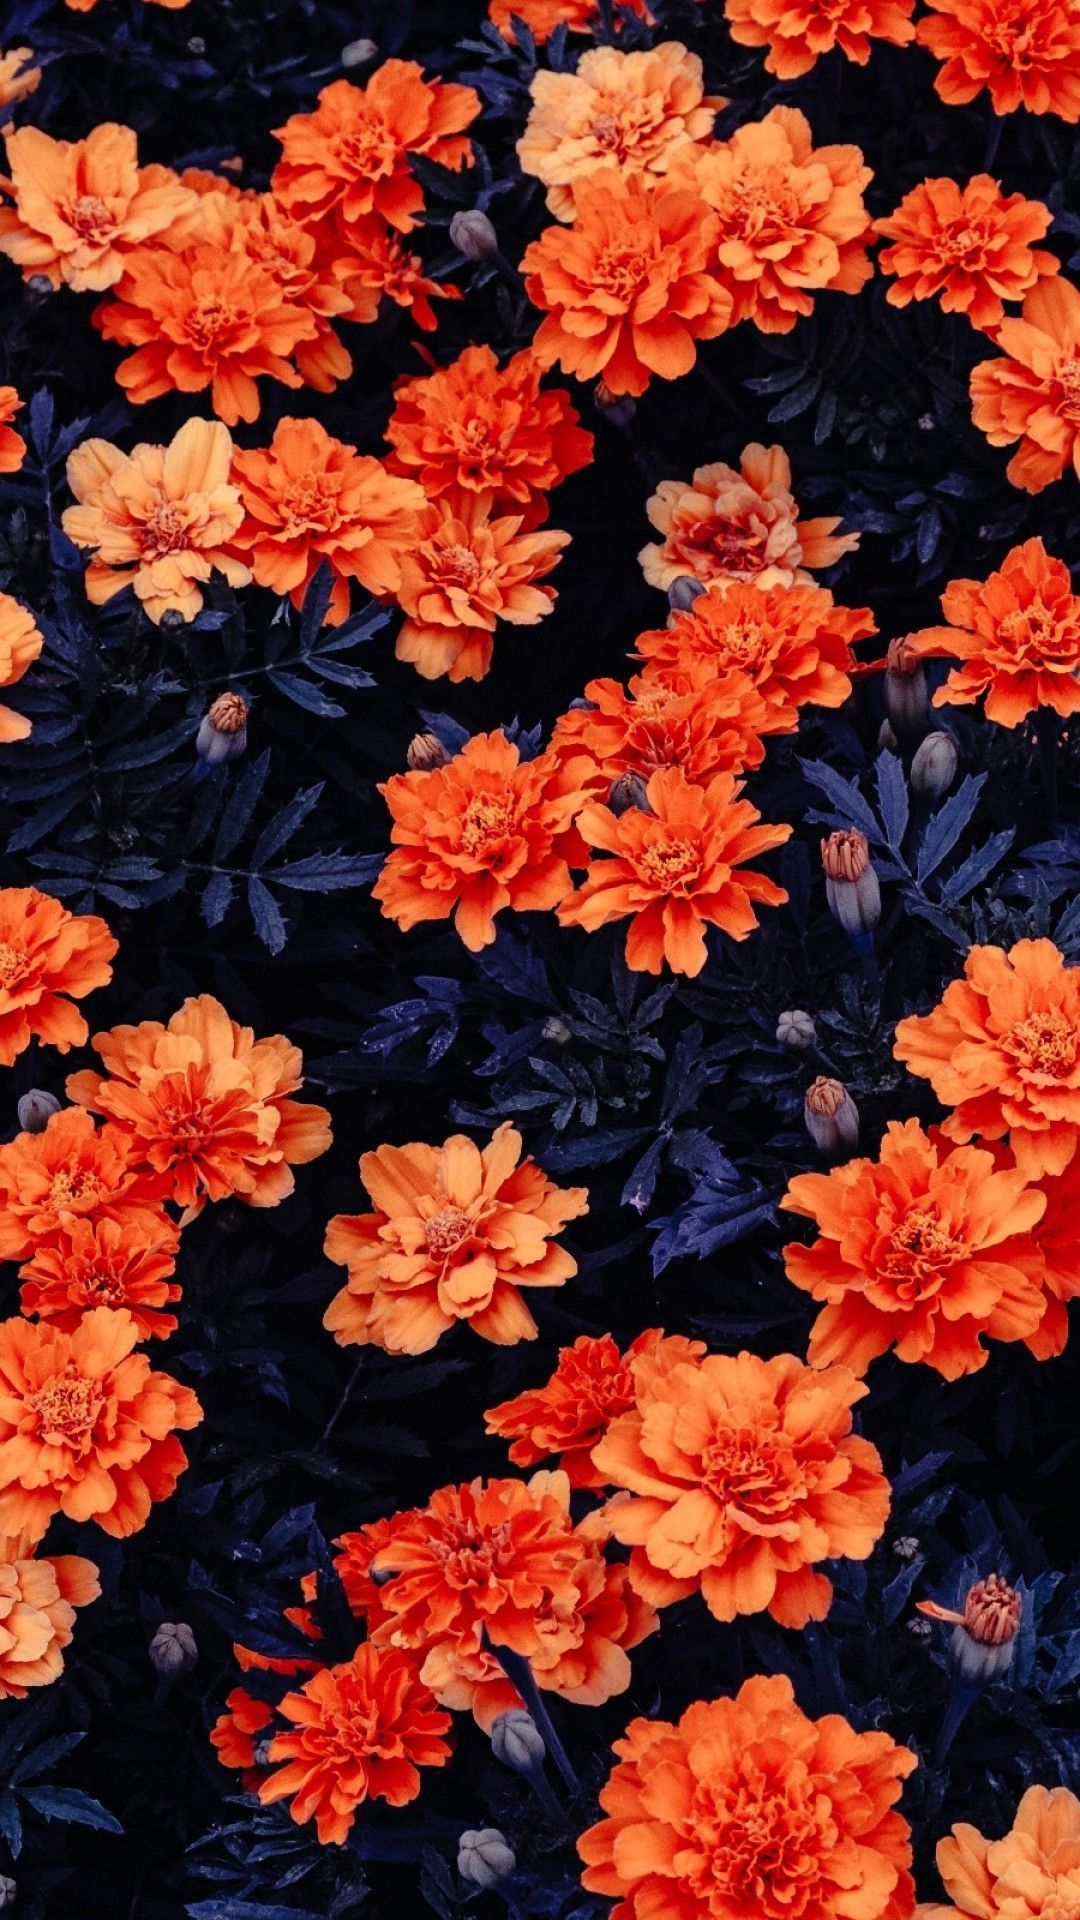 Orange Flowers, Garden. Flower iphone wallpaper, Best flower wallpaper, Free flower wallpaper